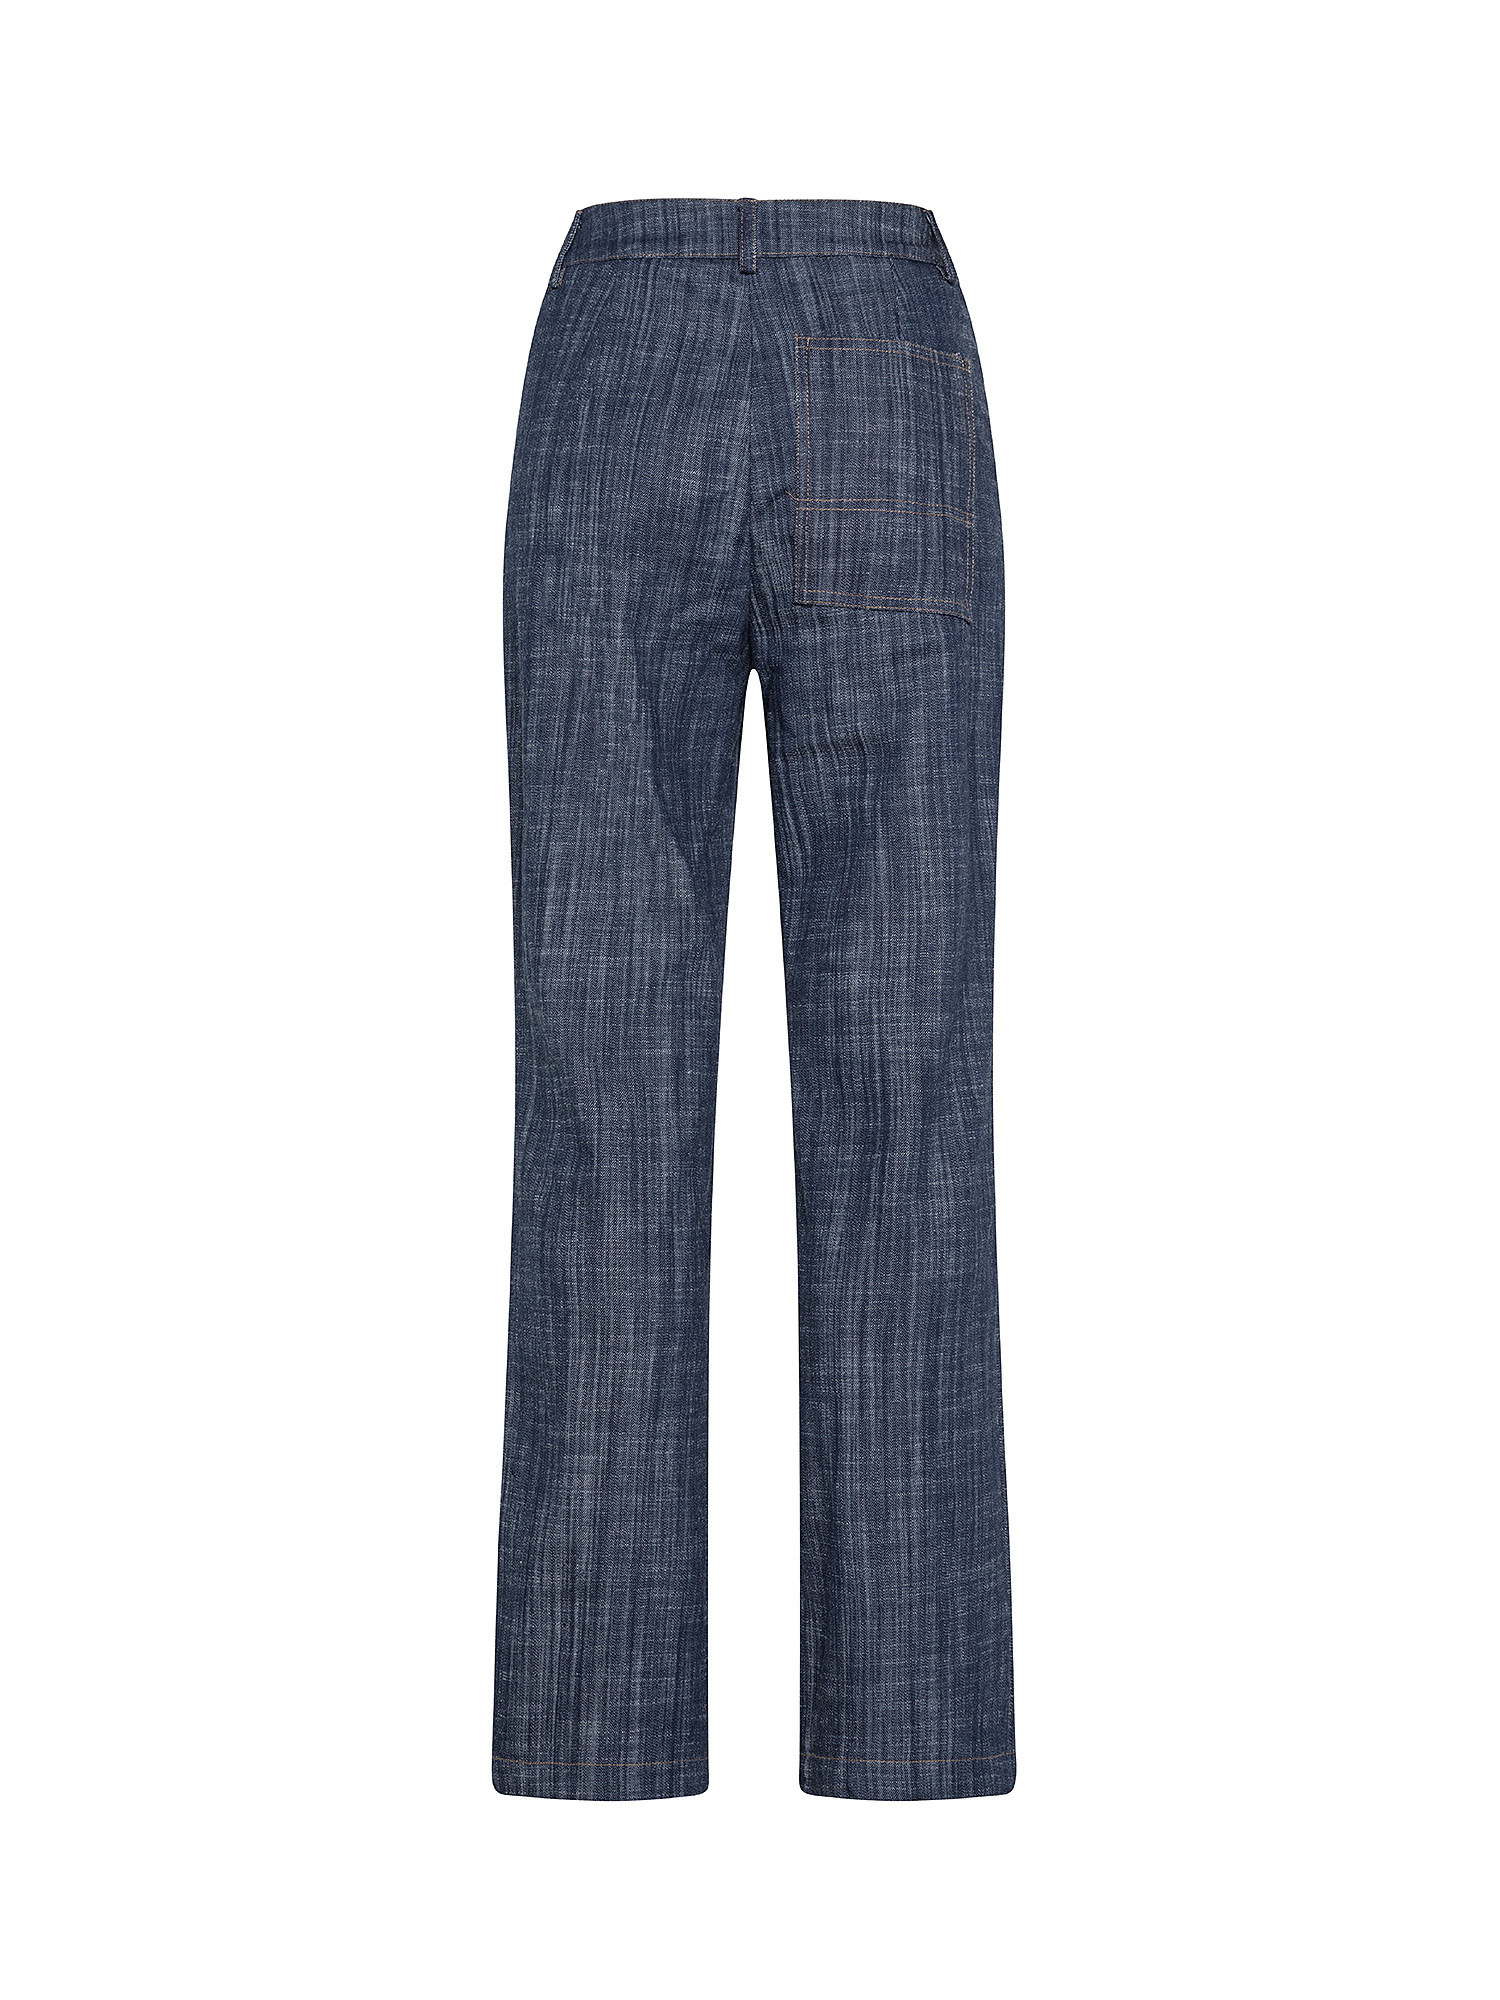 Pantalone jeans, Blu, large image number 1